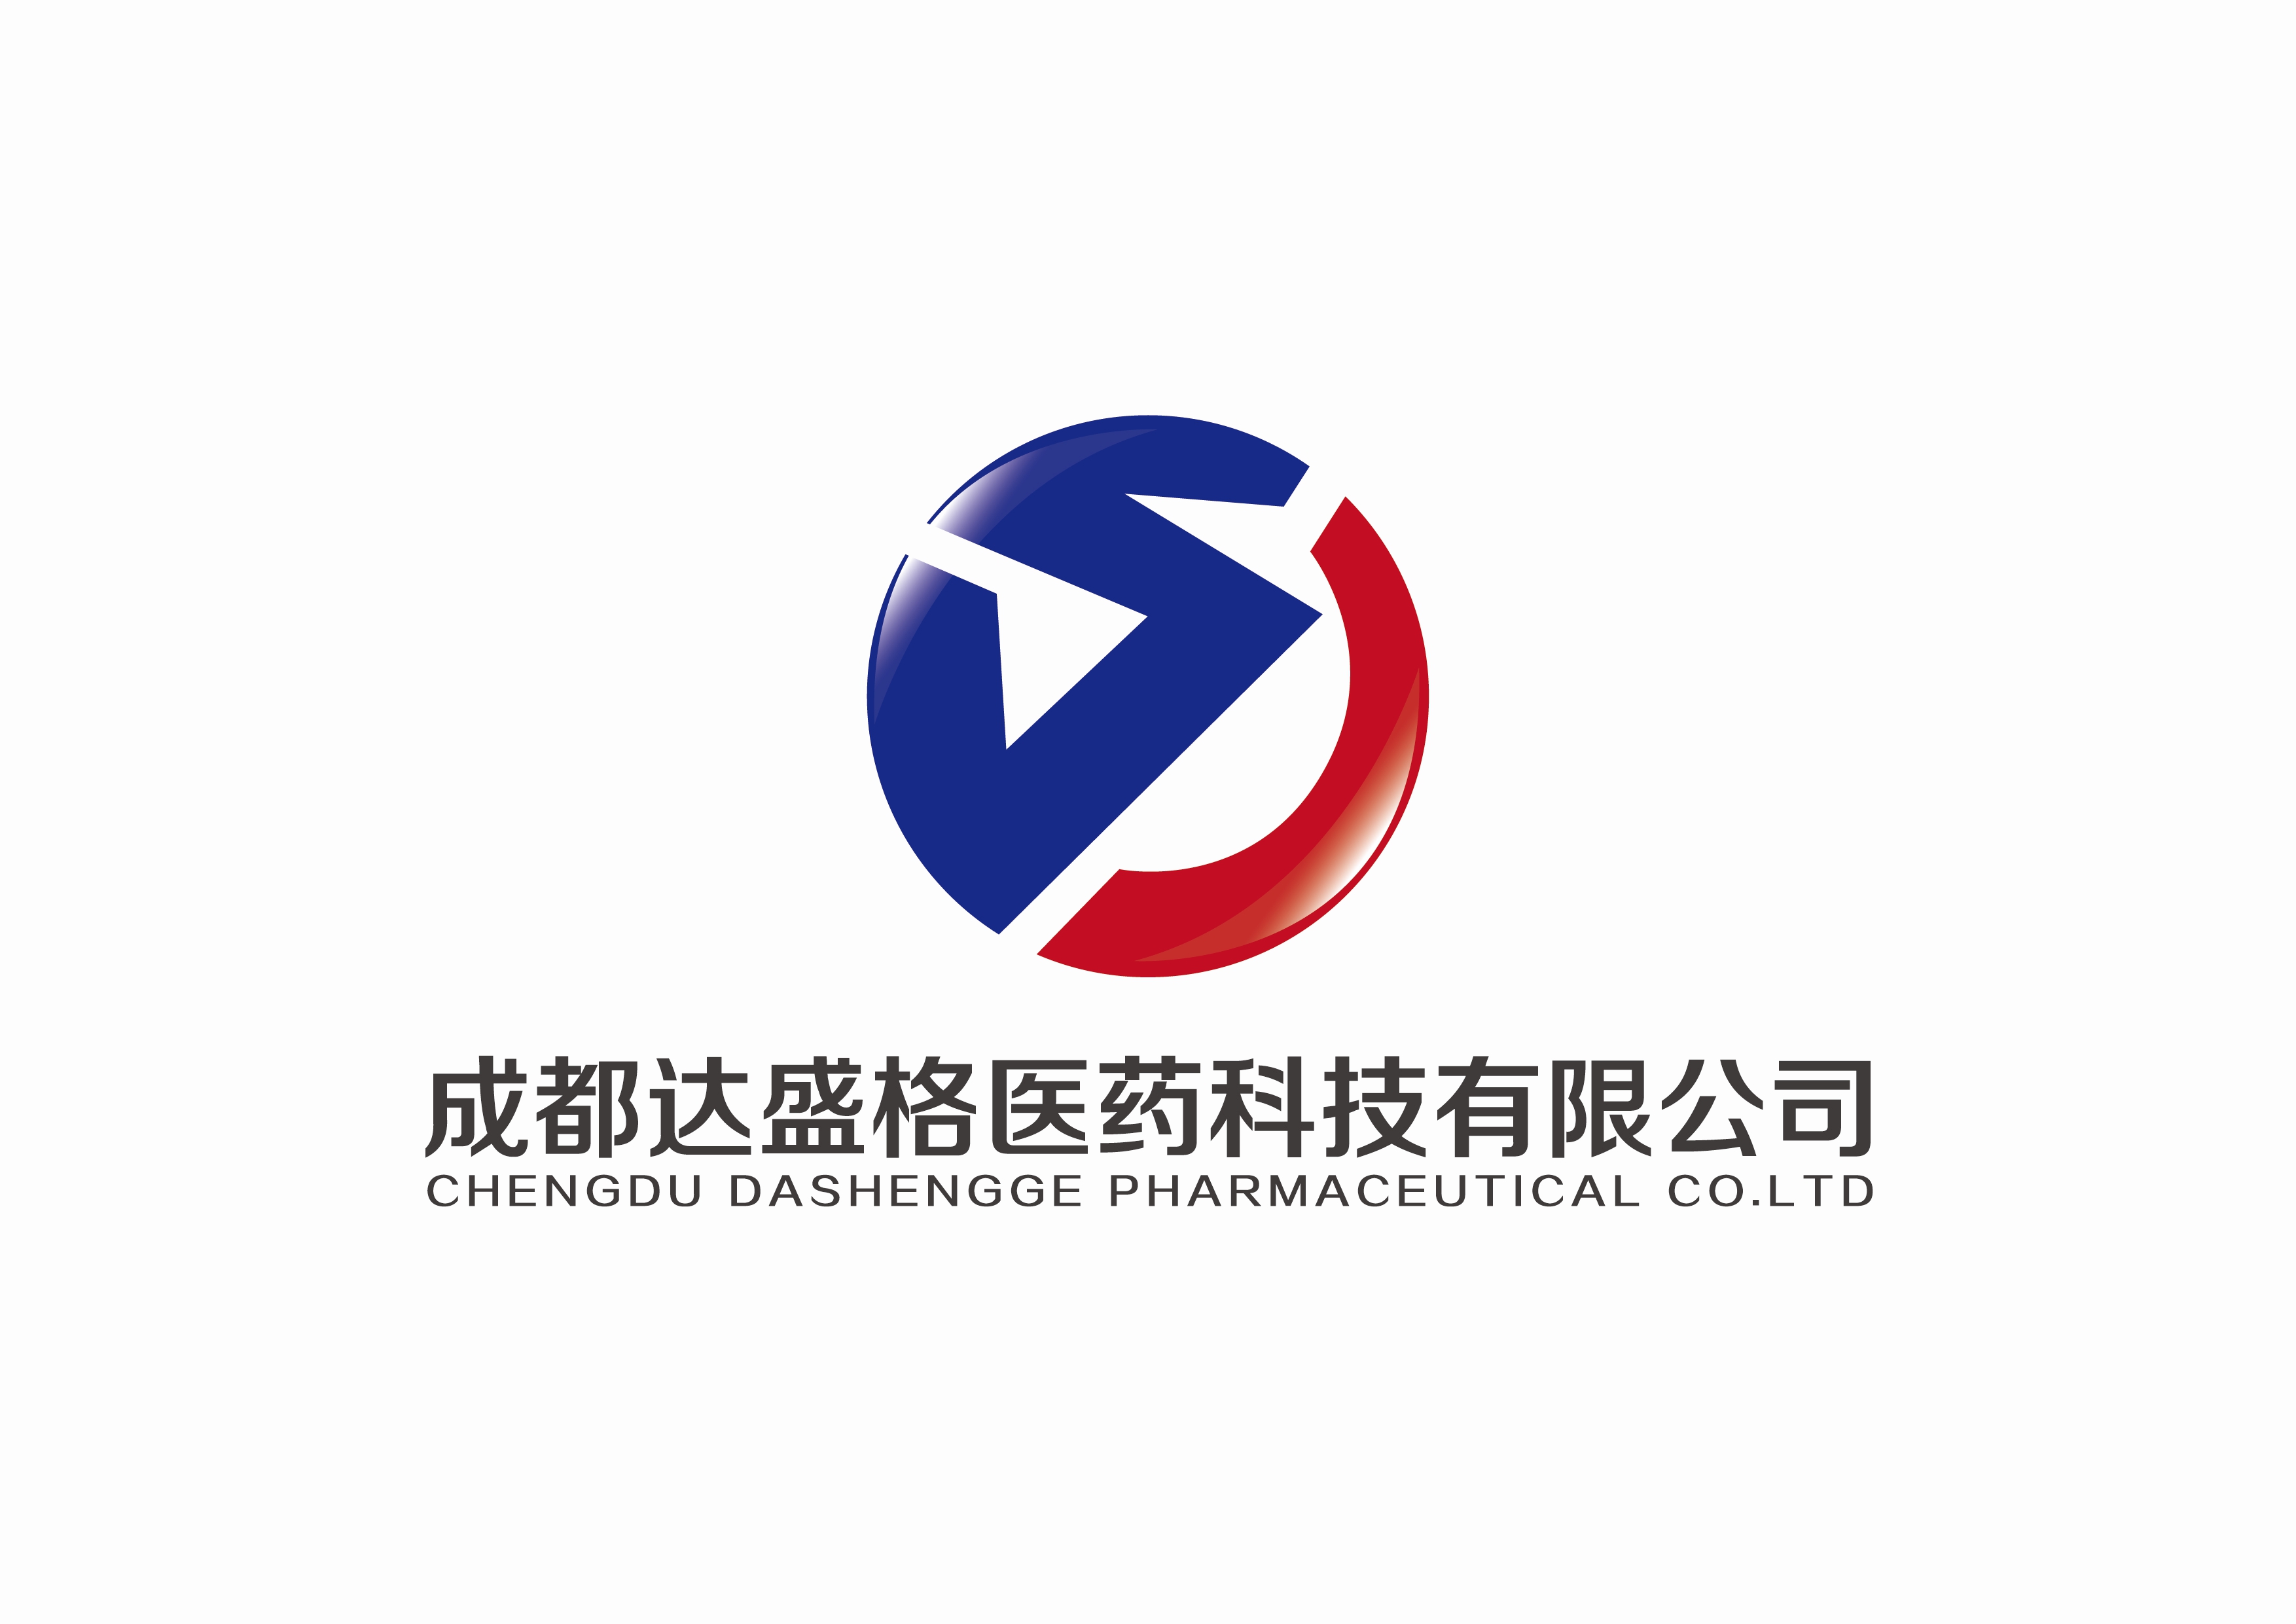 ChengDu DaShengGe Pharmaceutical Co.Ltd